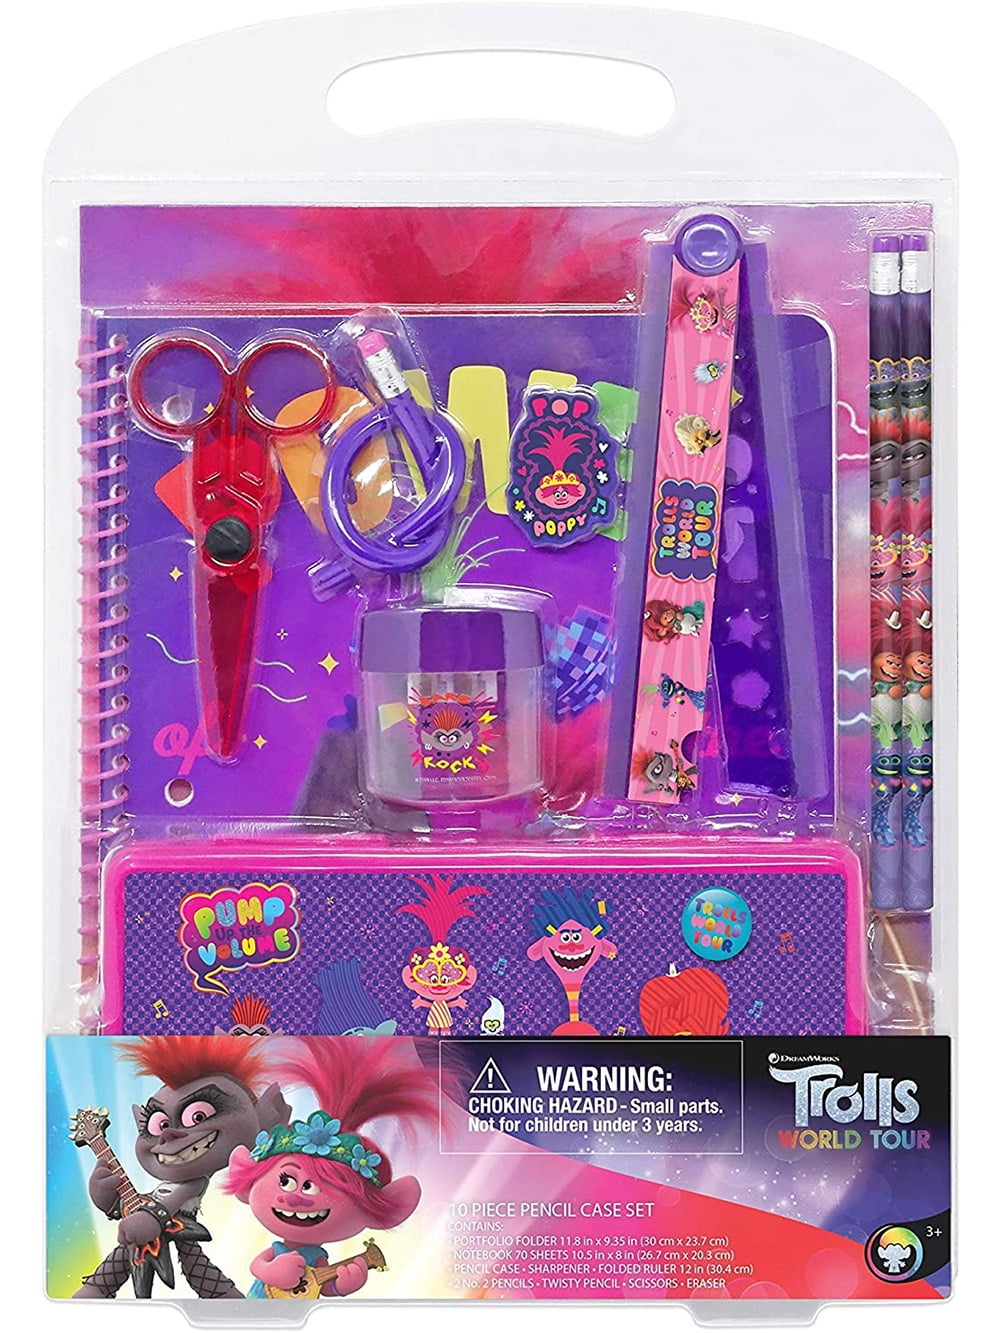 Trolls Poppy & Friend Stationary Set Pencil Eraser Ruler School Supplies 